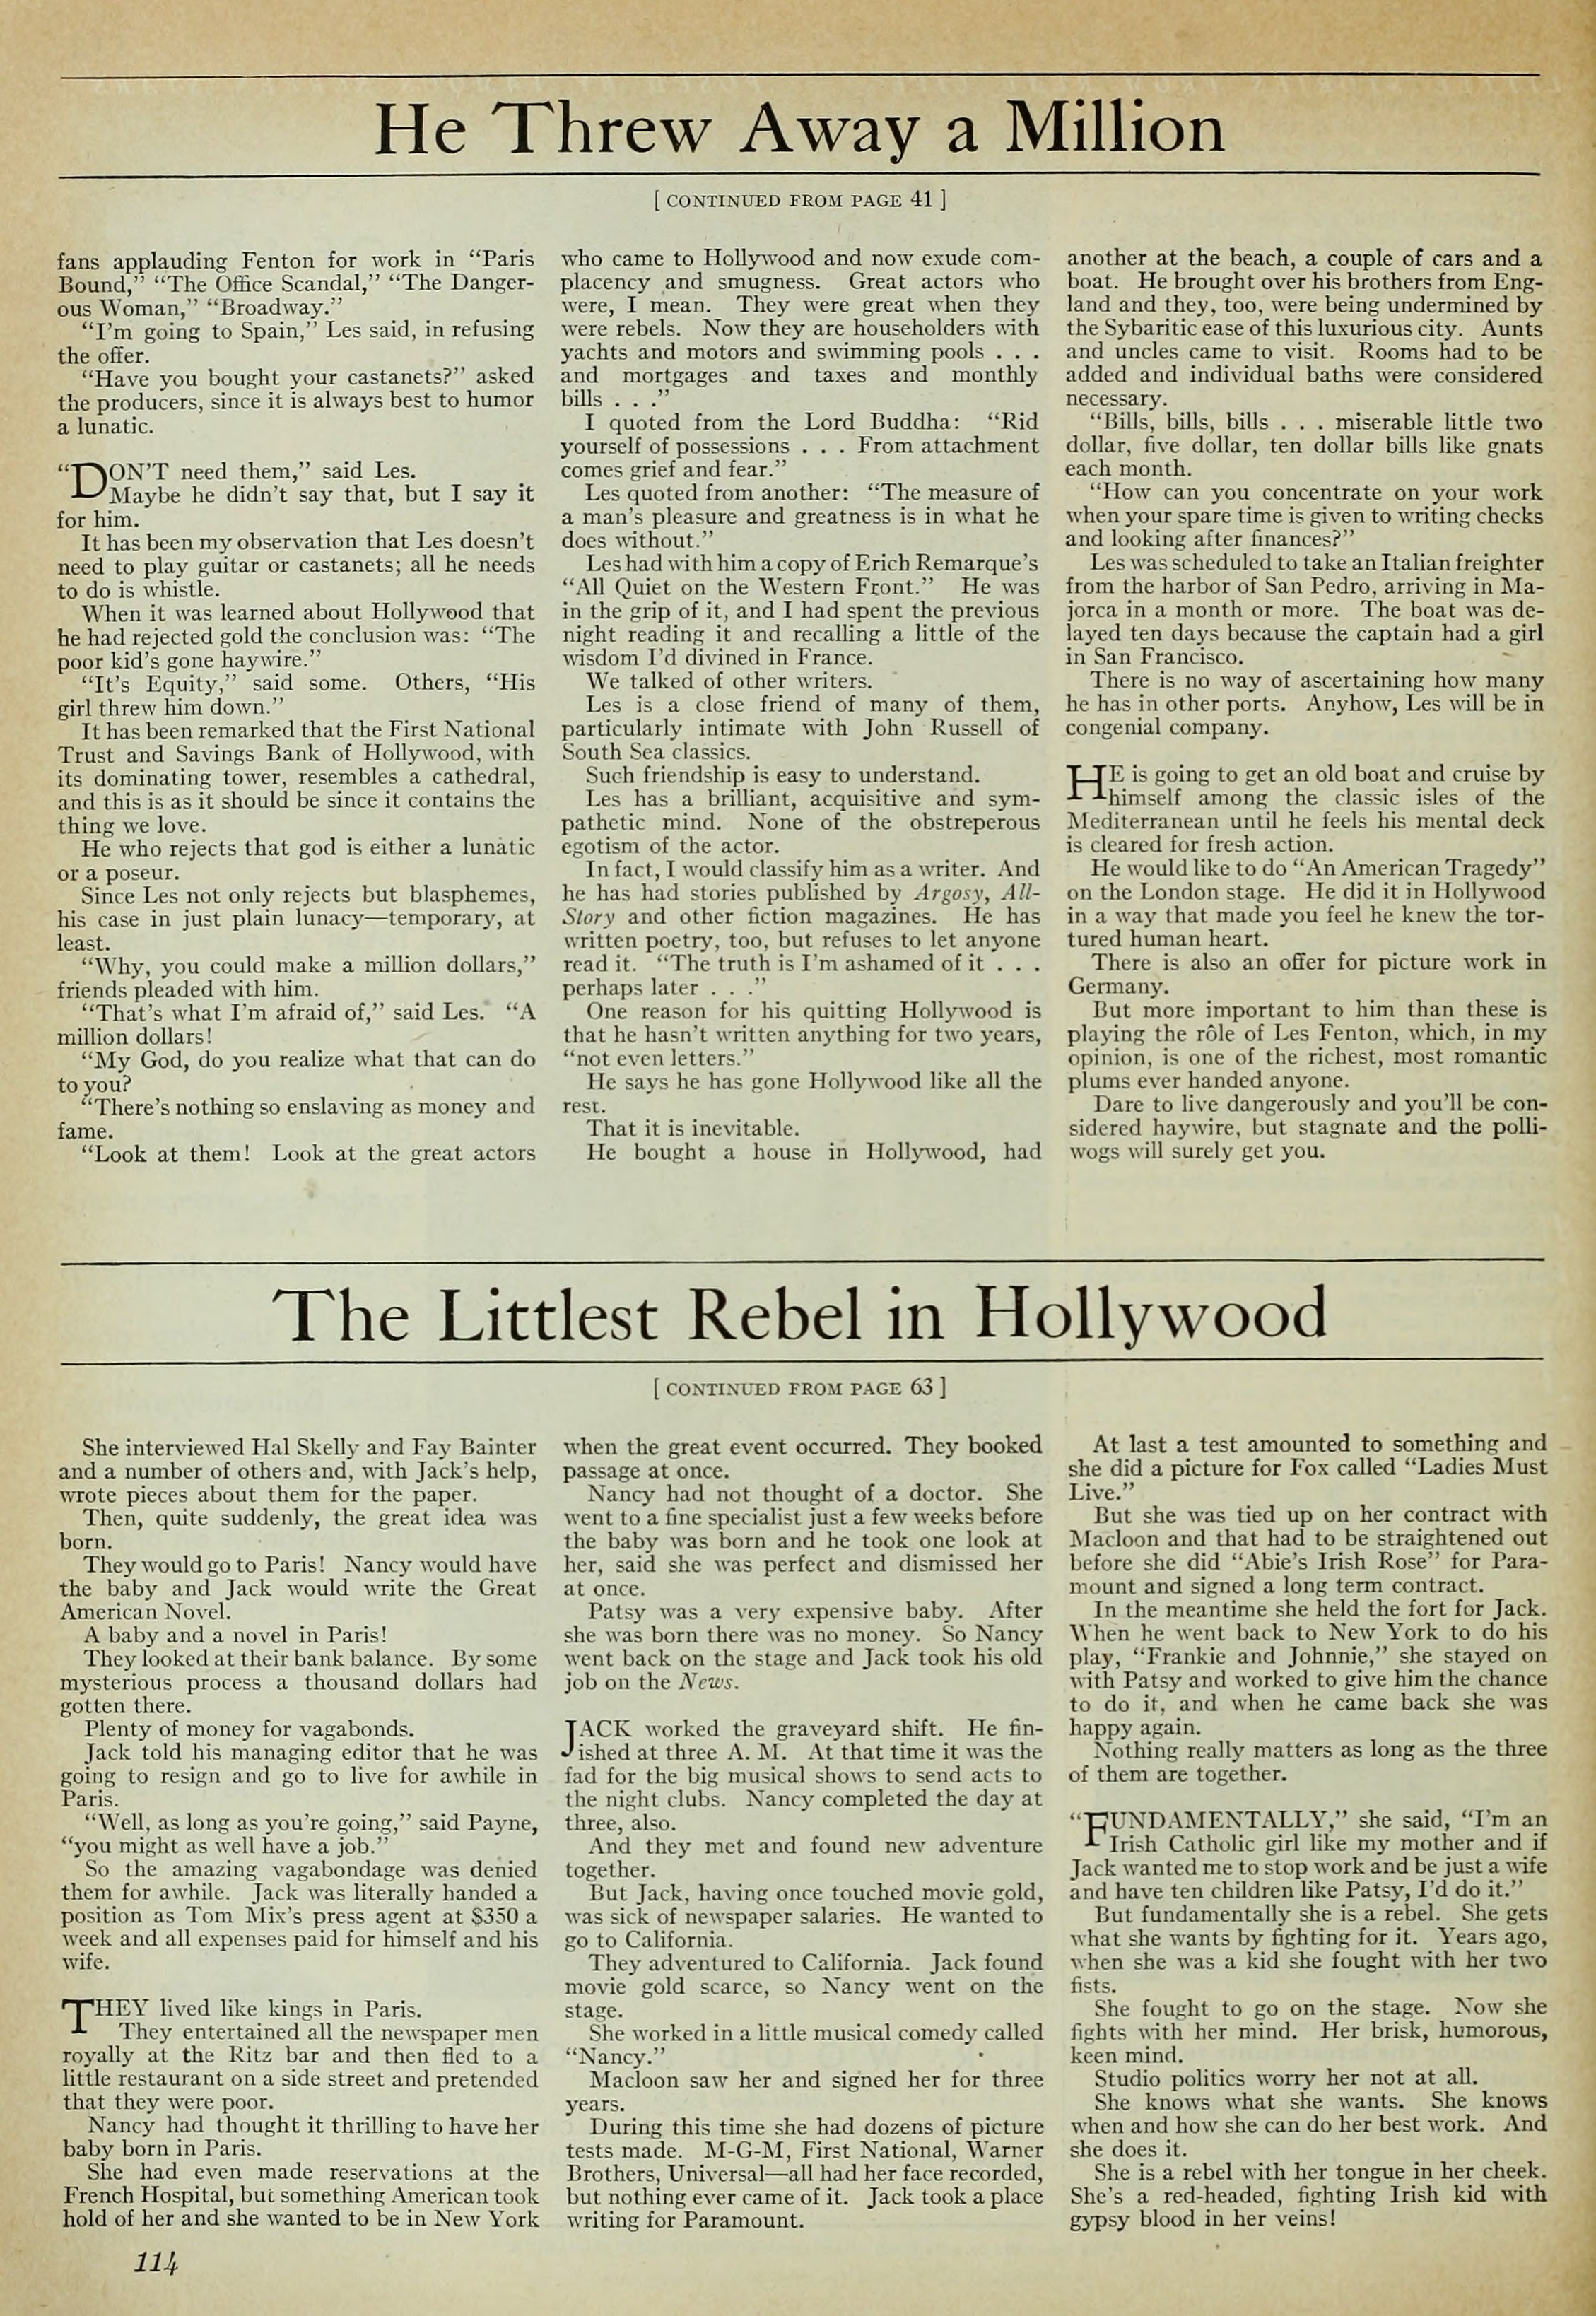 Leslie Fenton — He Threw Away a Million + Nancy Carroll — The Littlest Rebel in Hollywood (1929) | www.vintoz.com